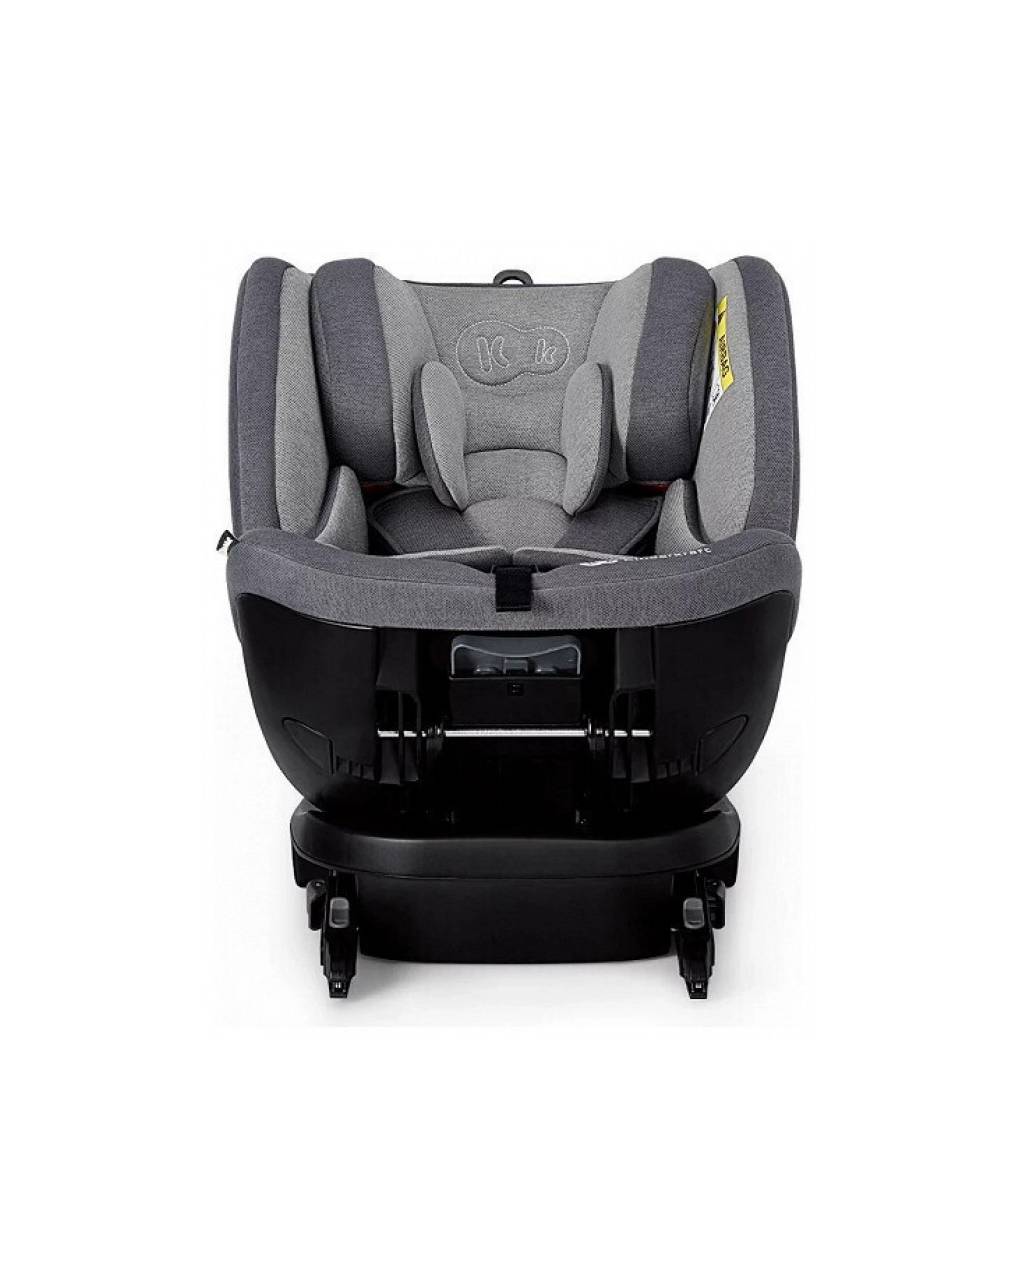 Kinderkraft κάθισμα αυτοκινήτου xpedition grey isofix system - Kinderkraft